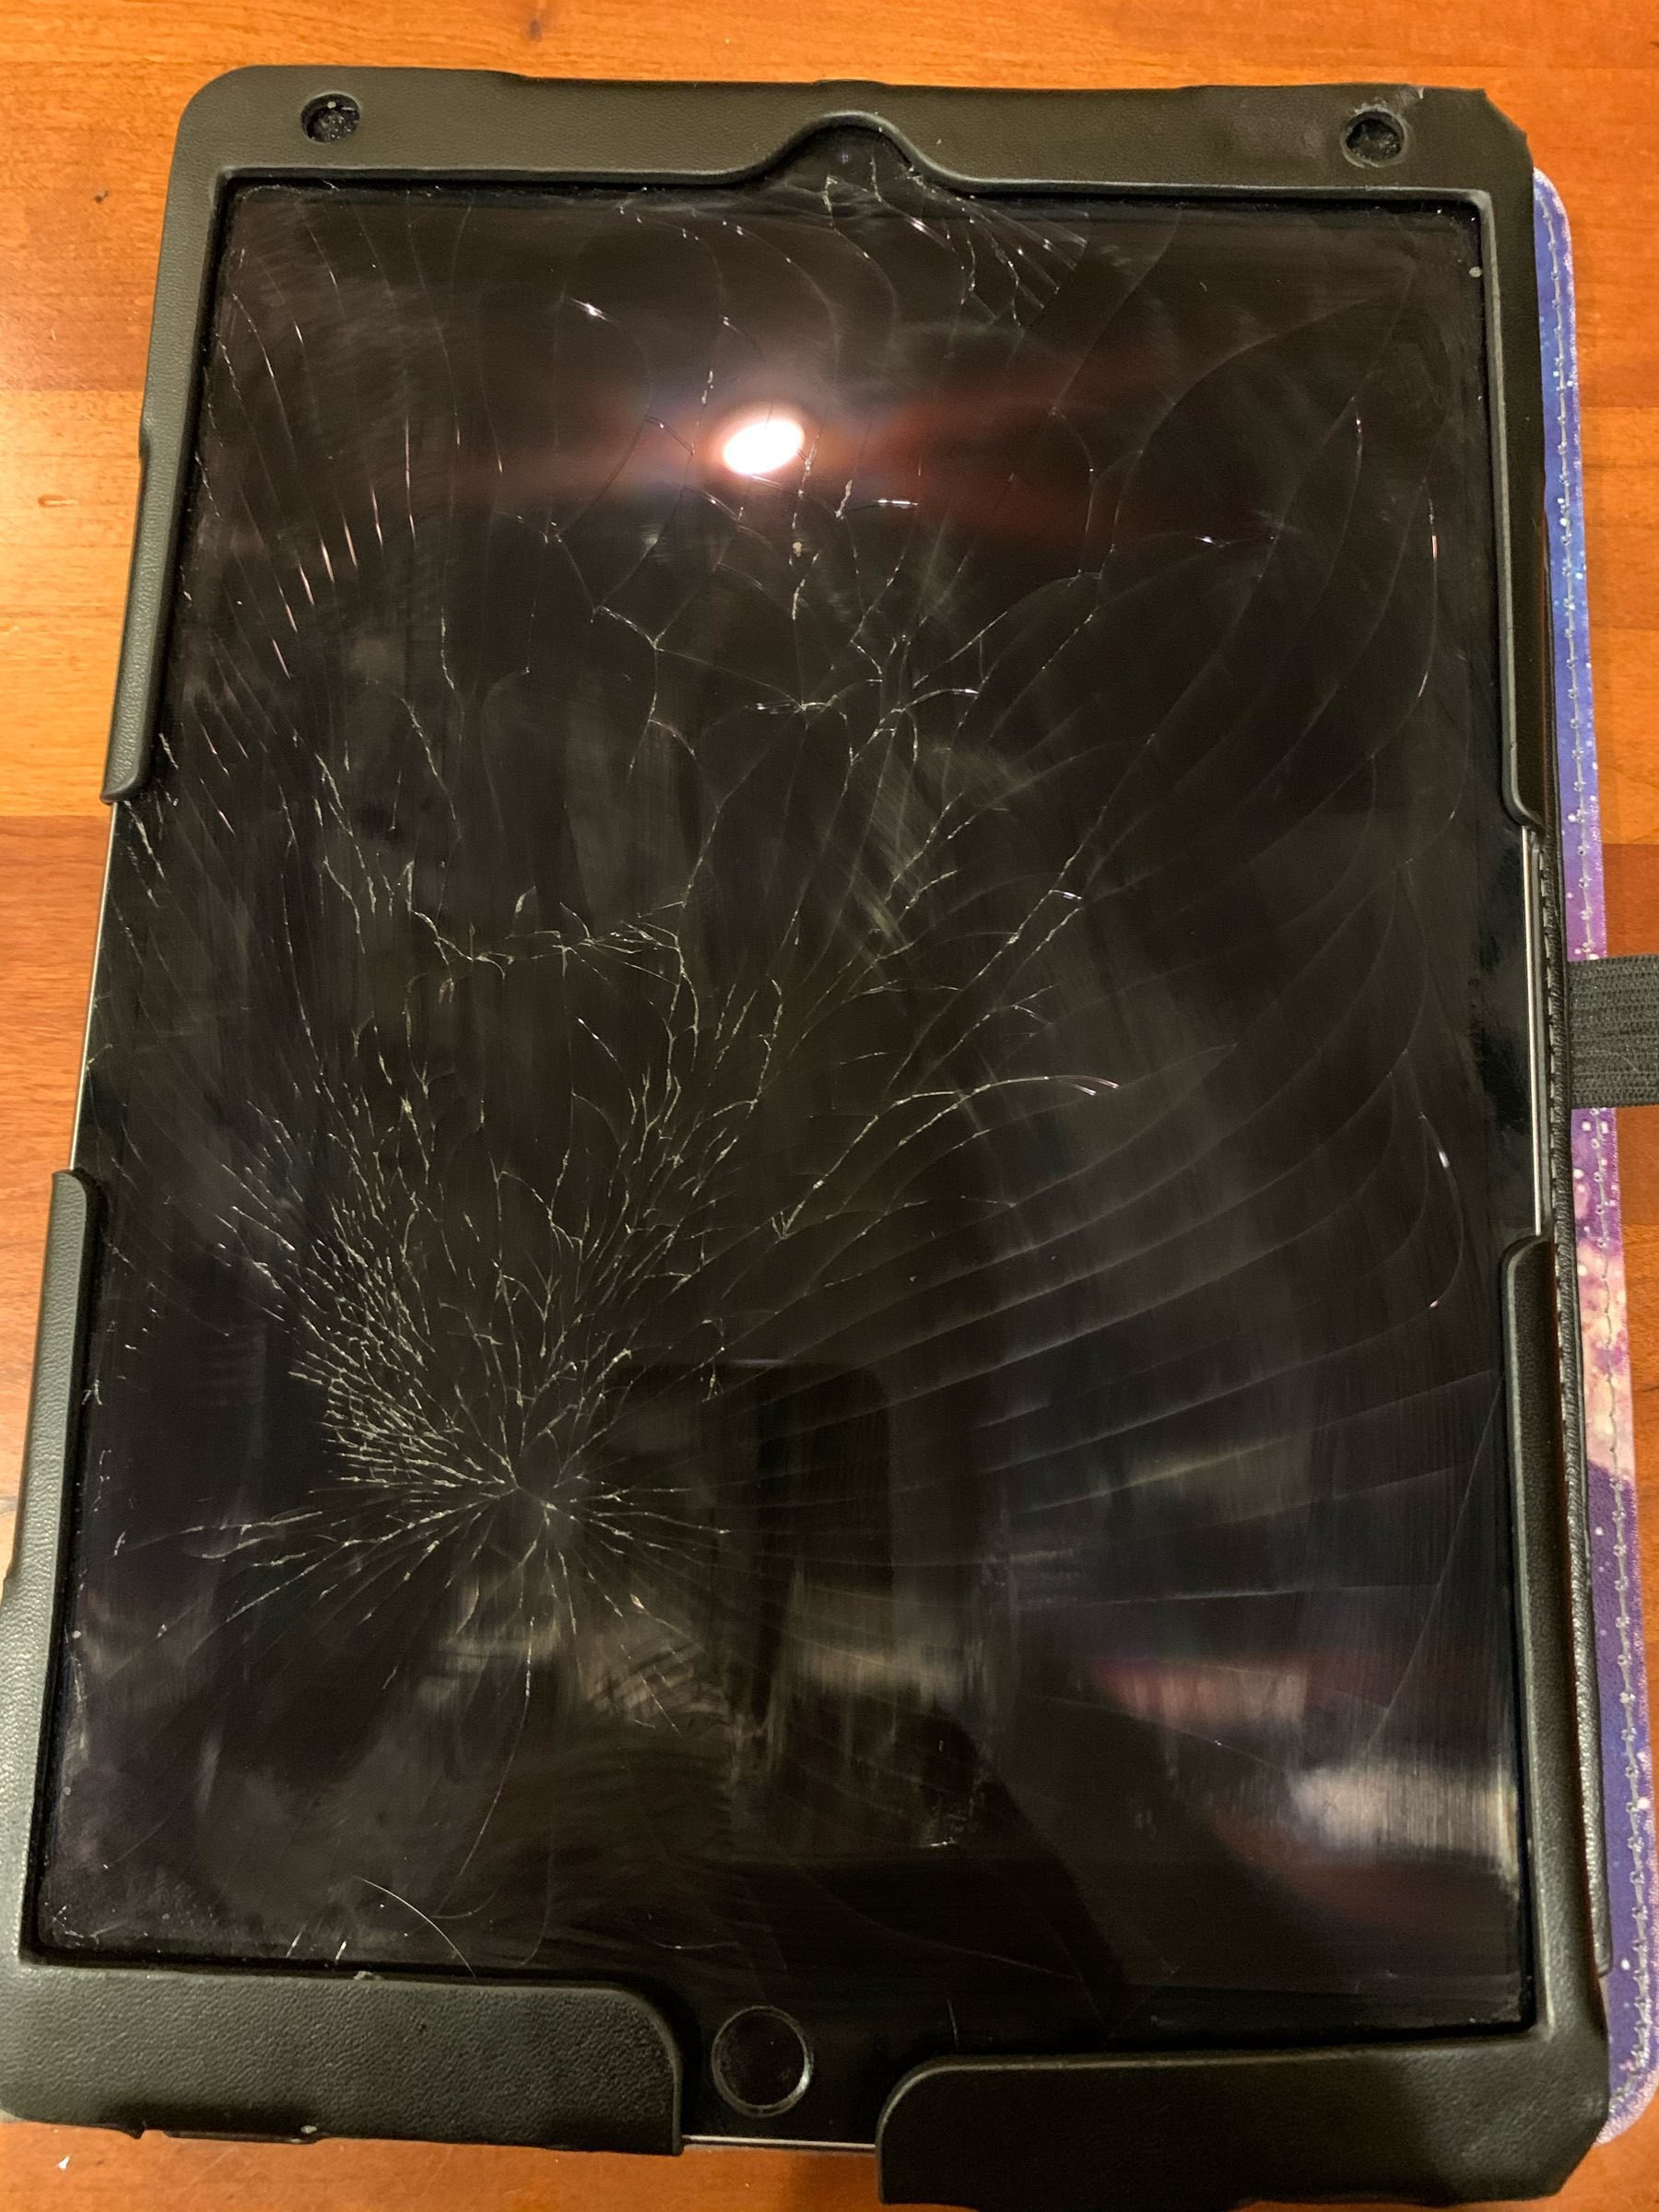 Very cracked iPad Pro 10.5" screen